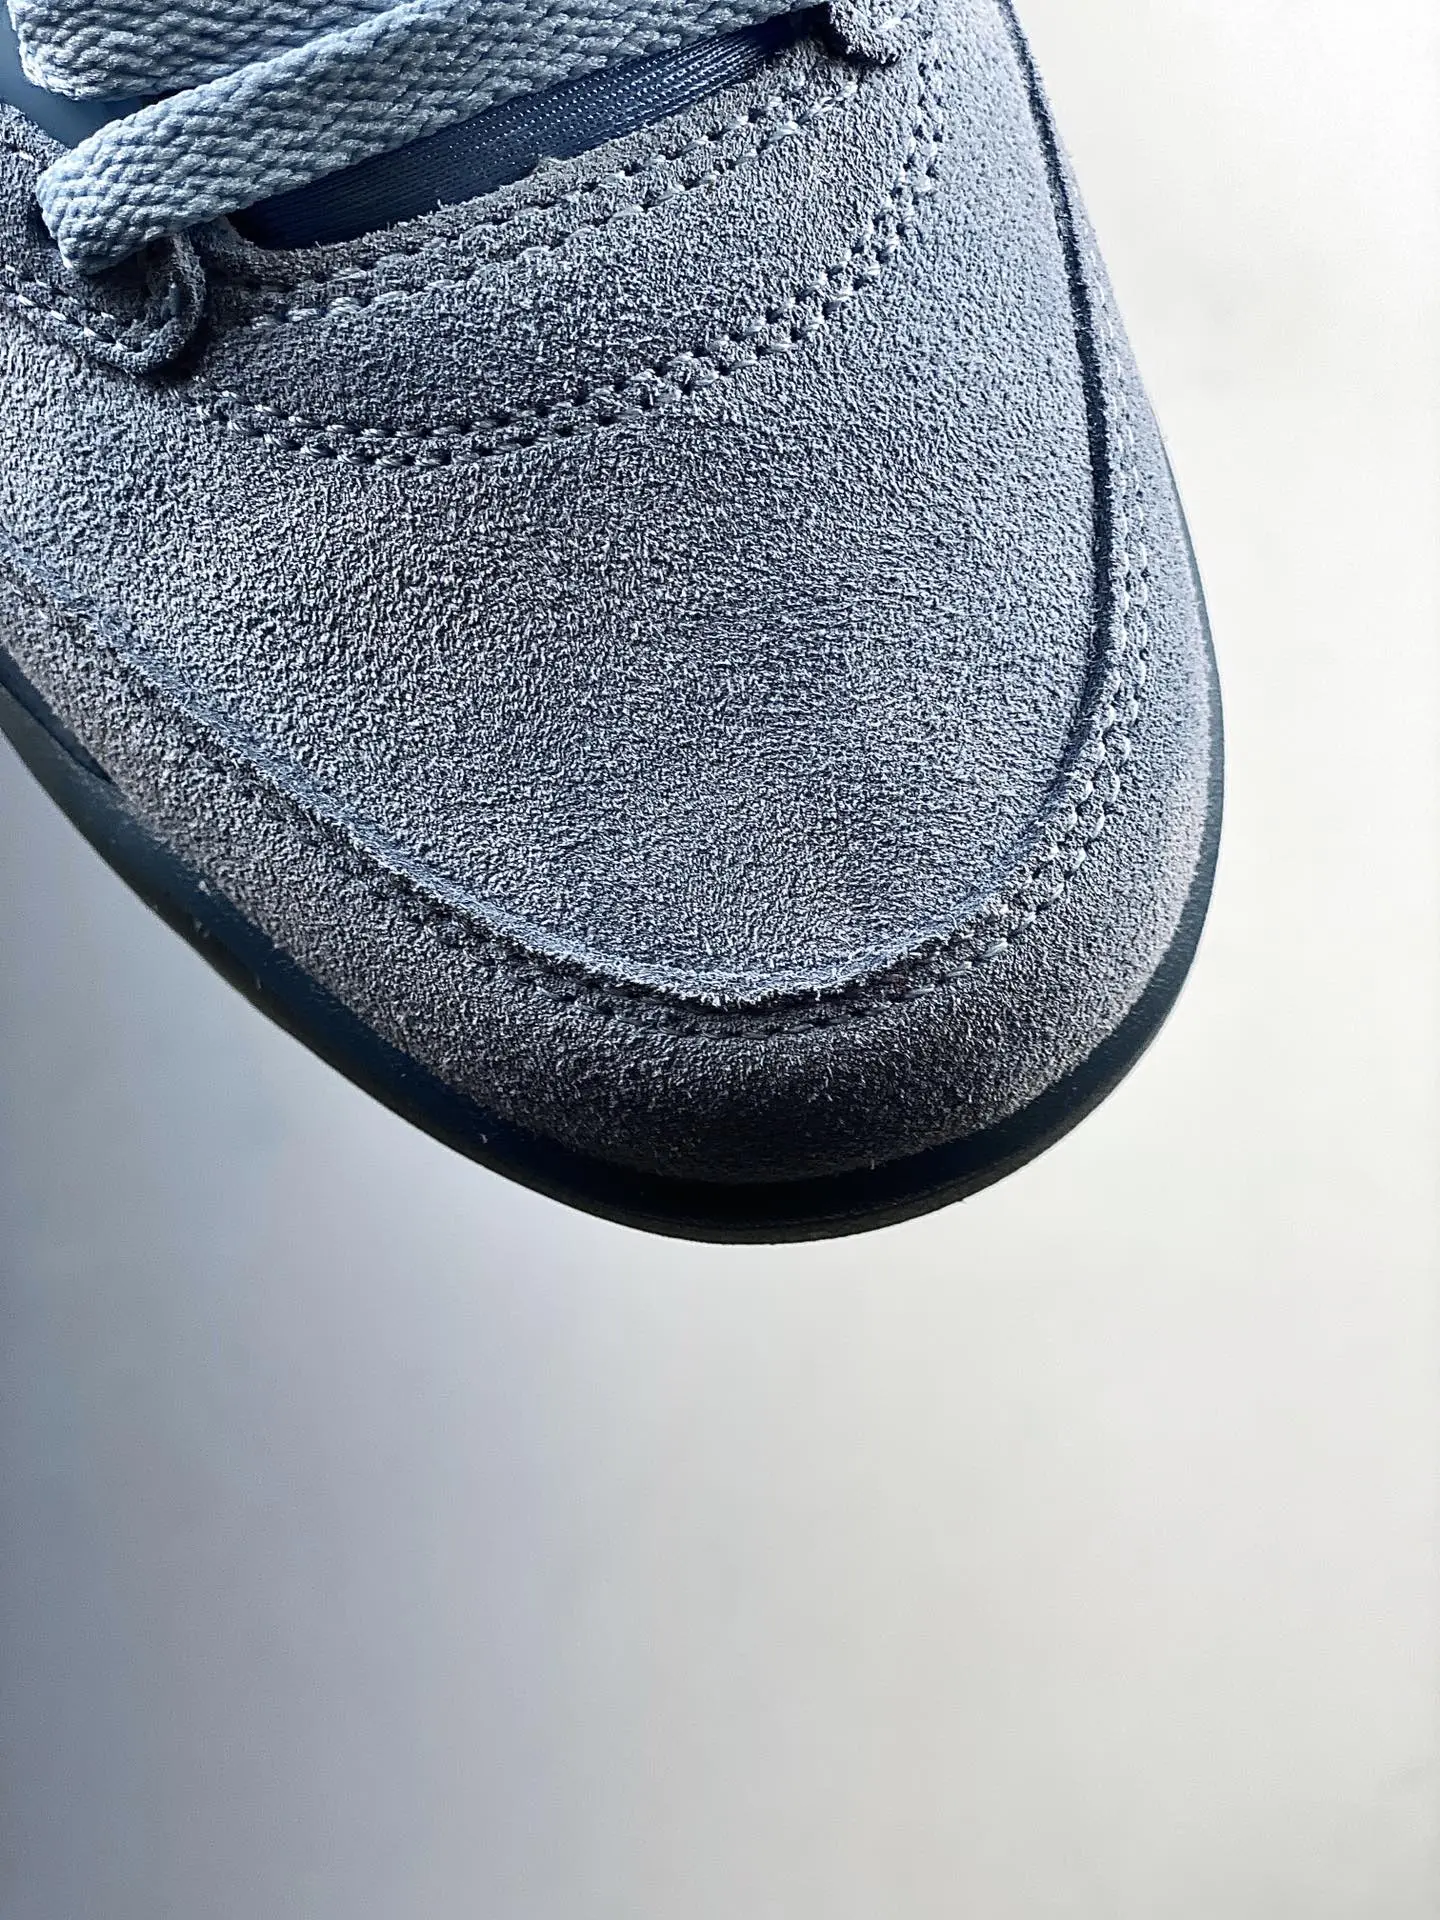 Nike Air Jordan 5 Retro Women's Blue Bird Basketball Shoes Review | YtaYta